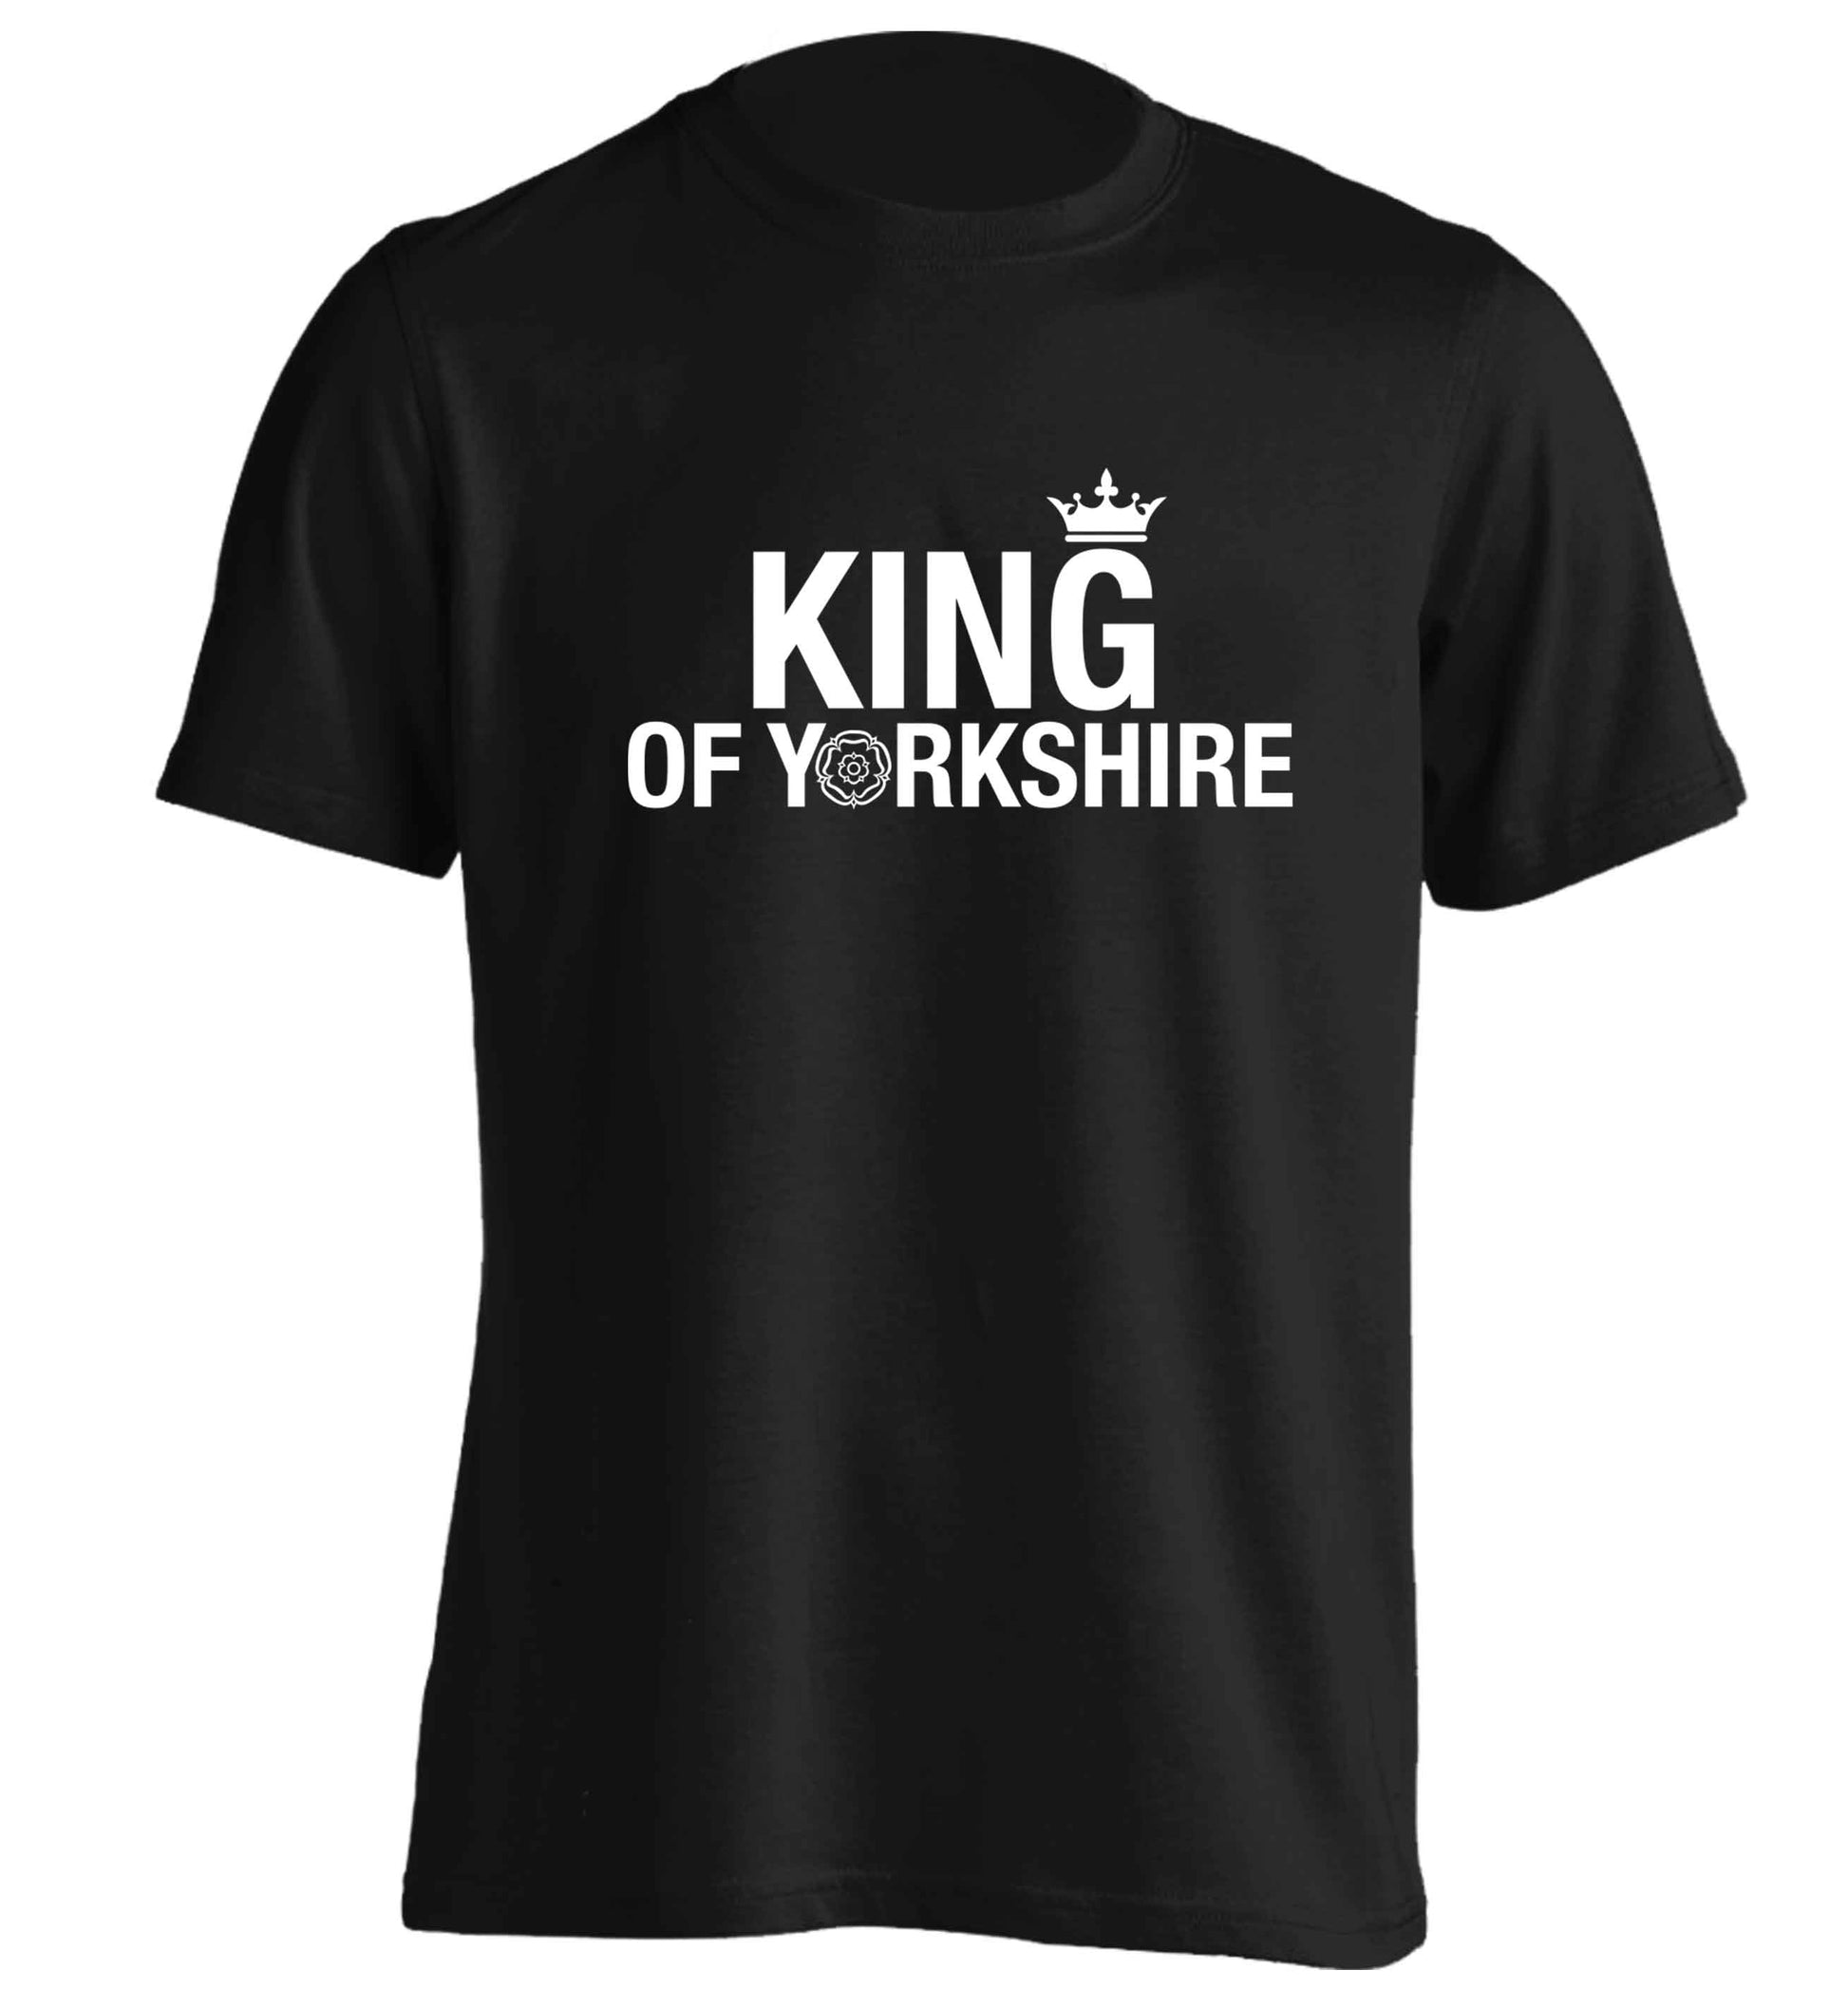 King of Yorkshire adults unisex black Tshirt 2XL